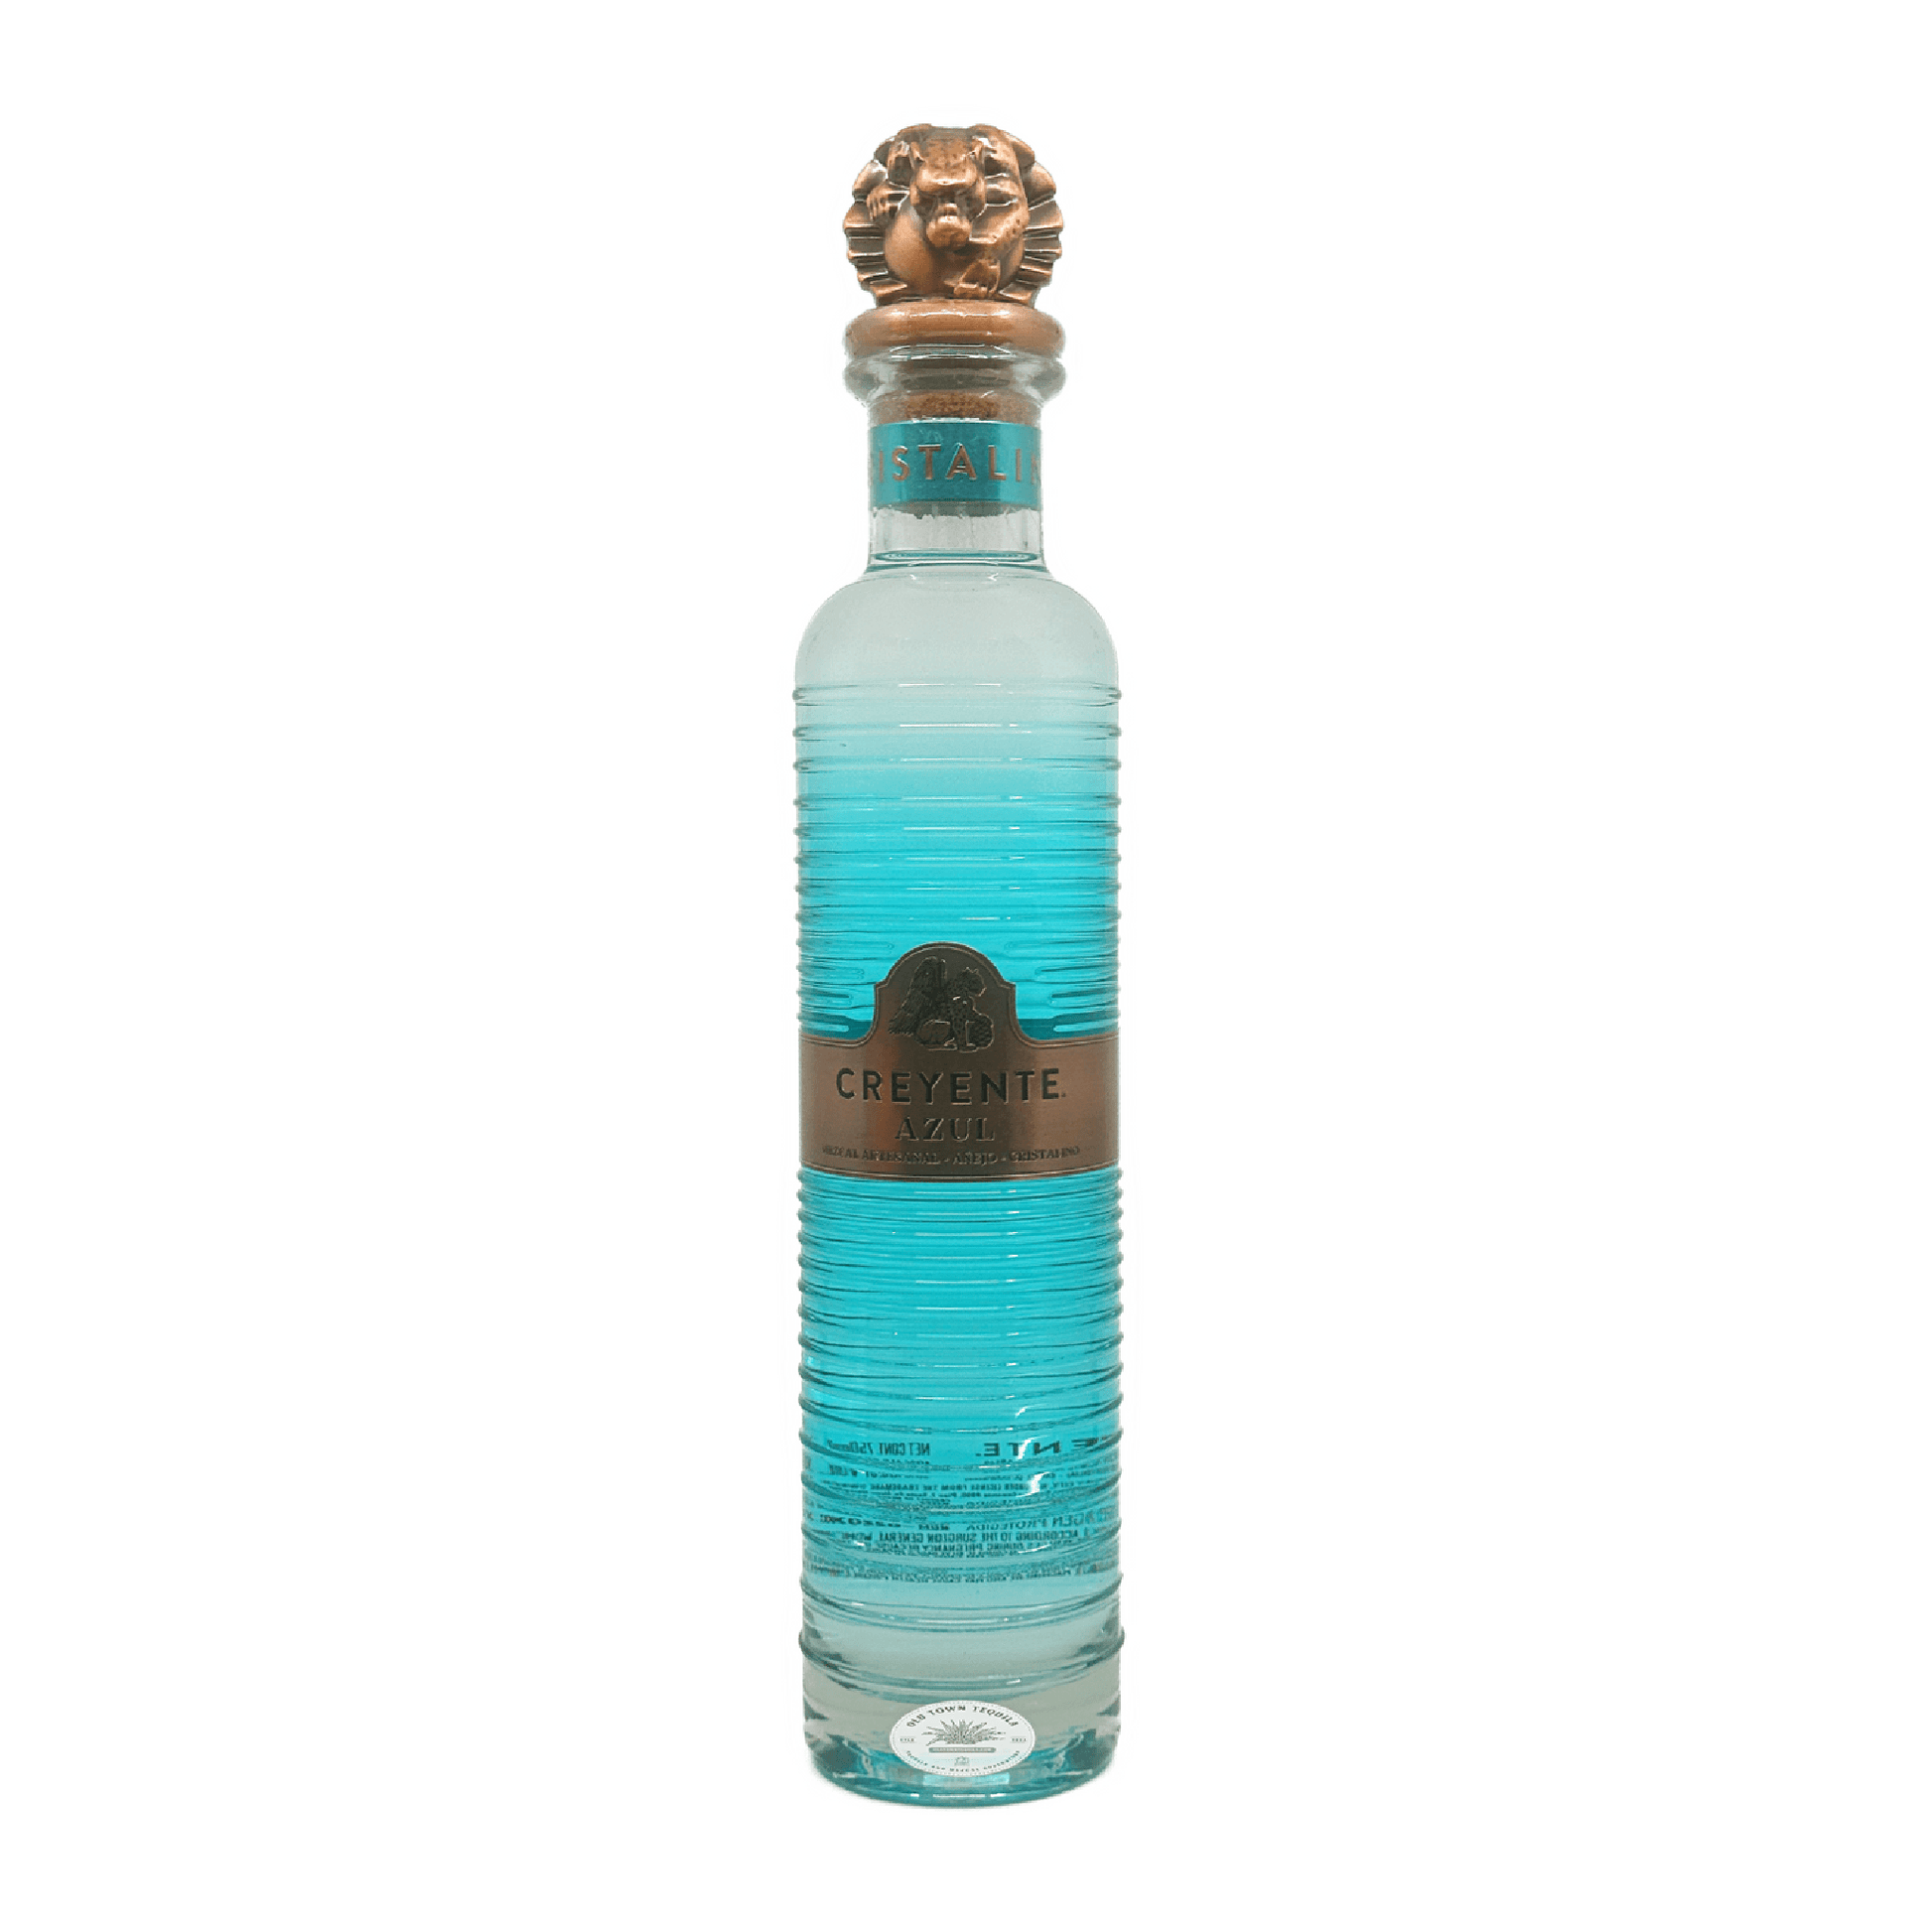 Creyente Azul Cristalino Anejo - Liquor Geeks